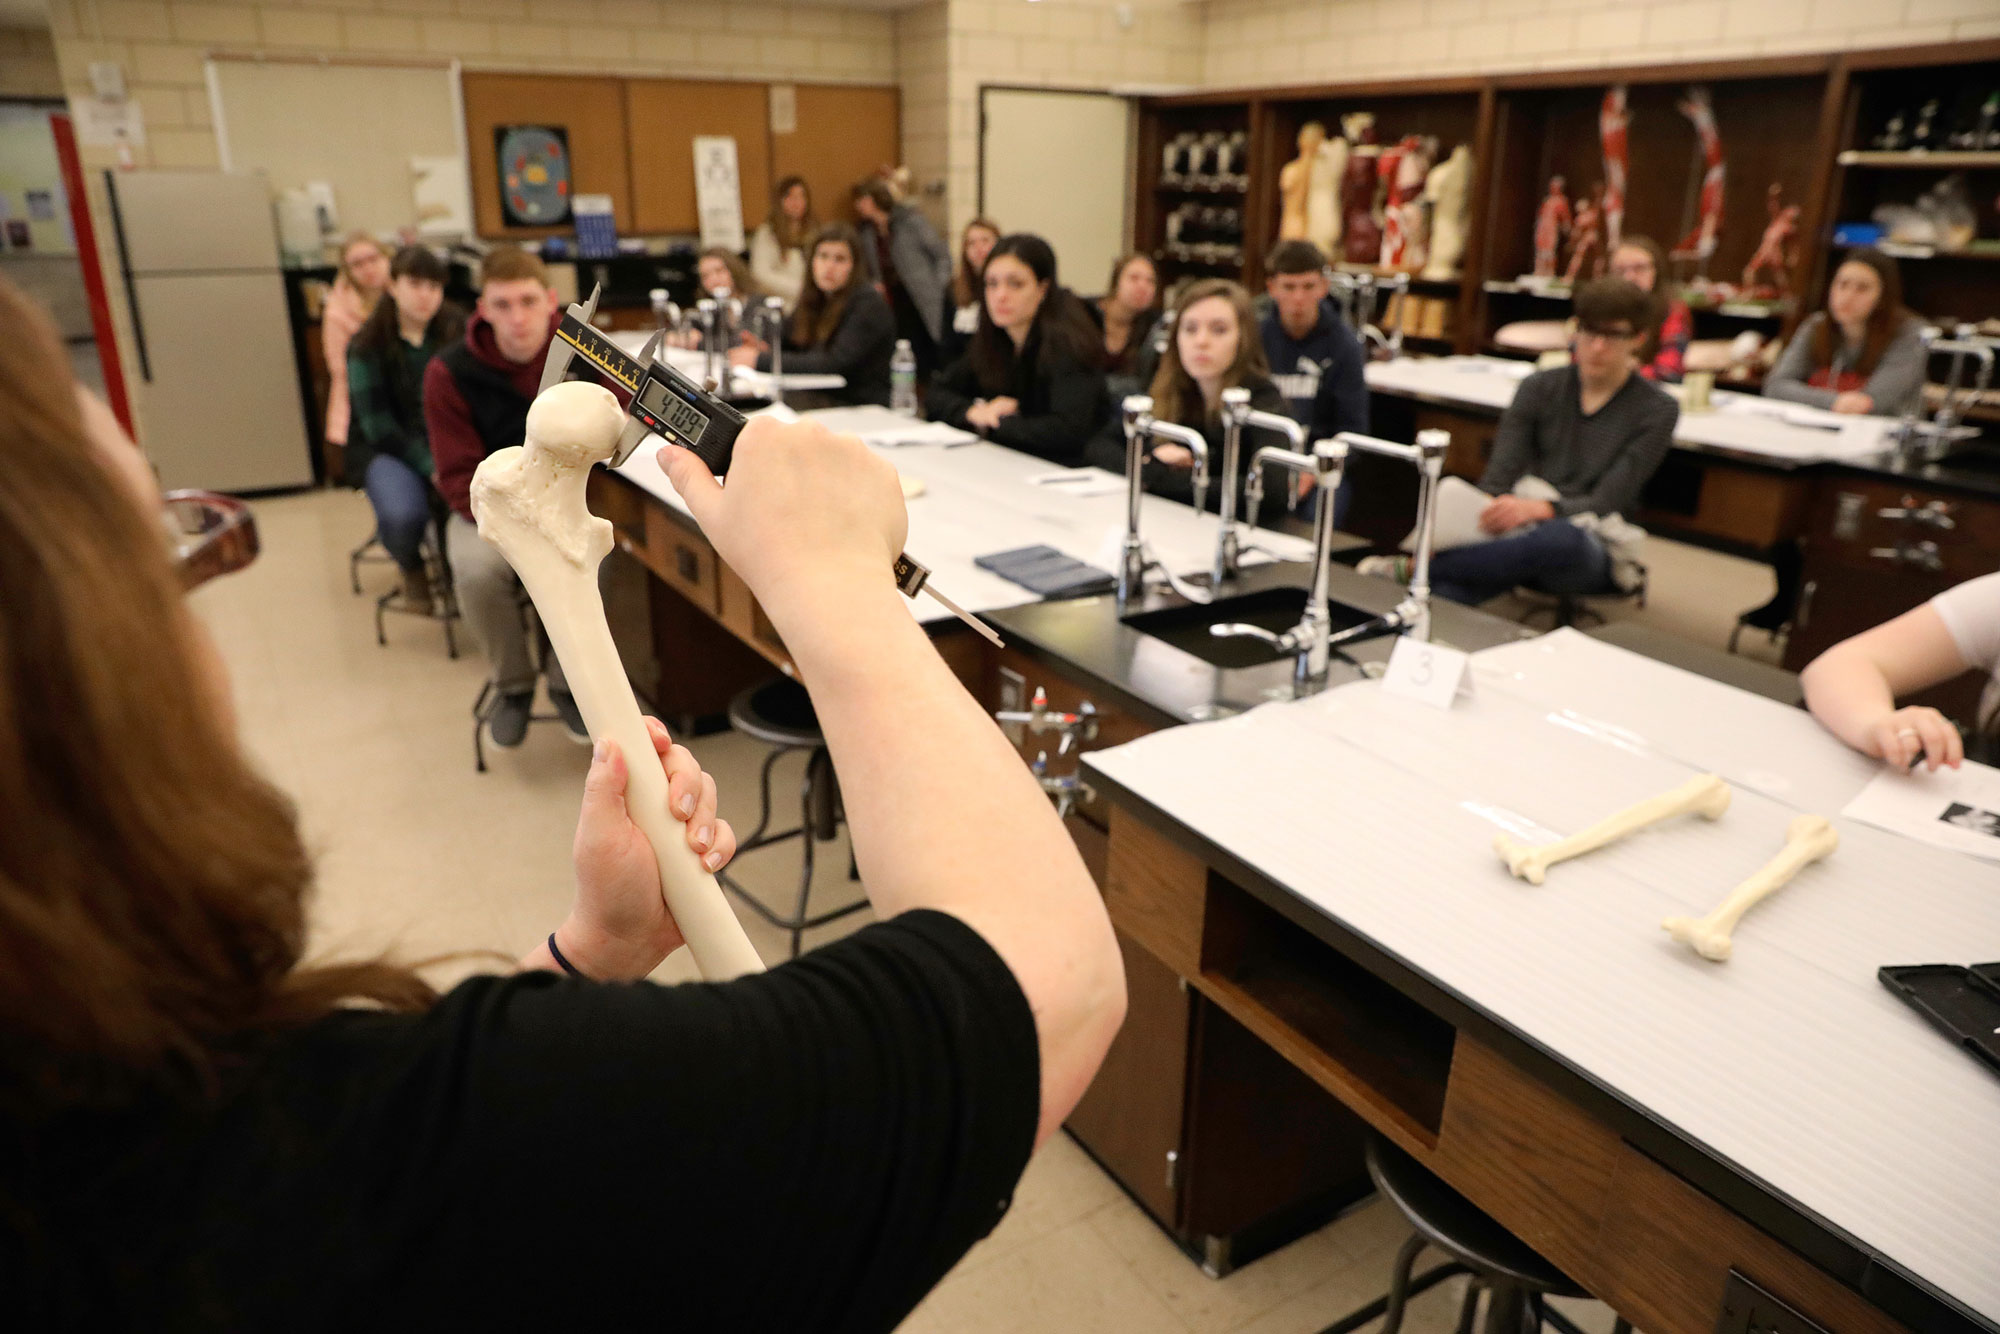 Teacher measuring femur bone while students watch